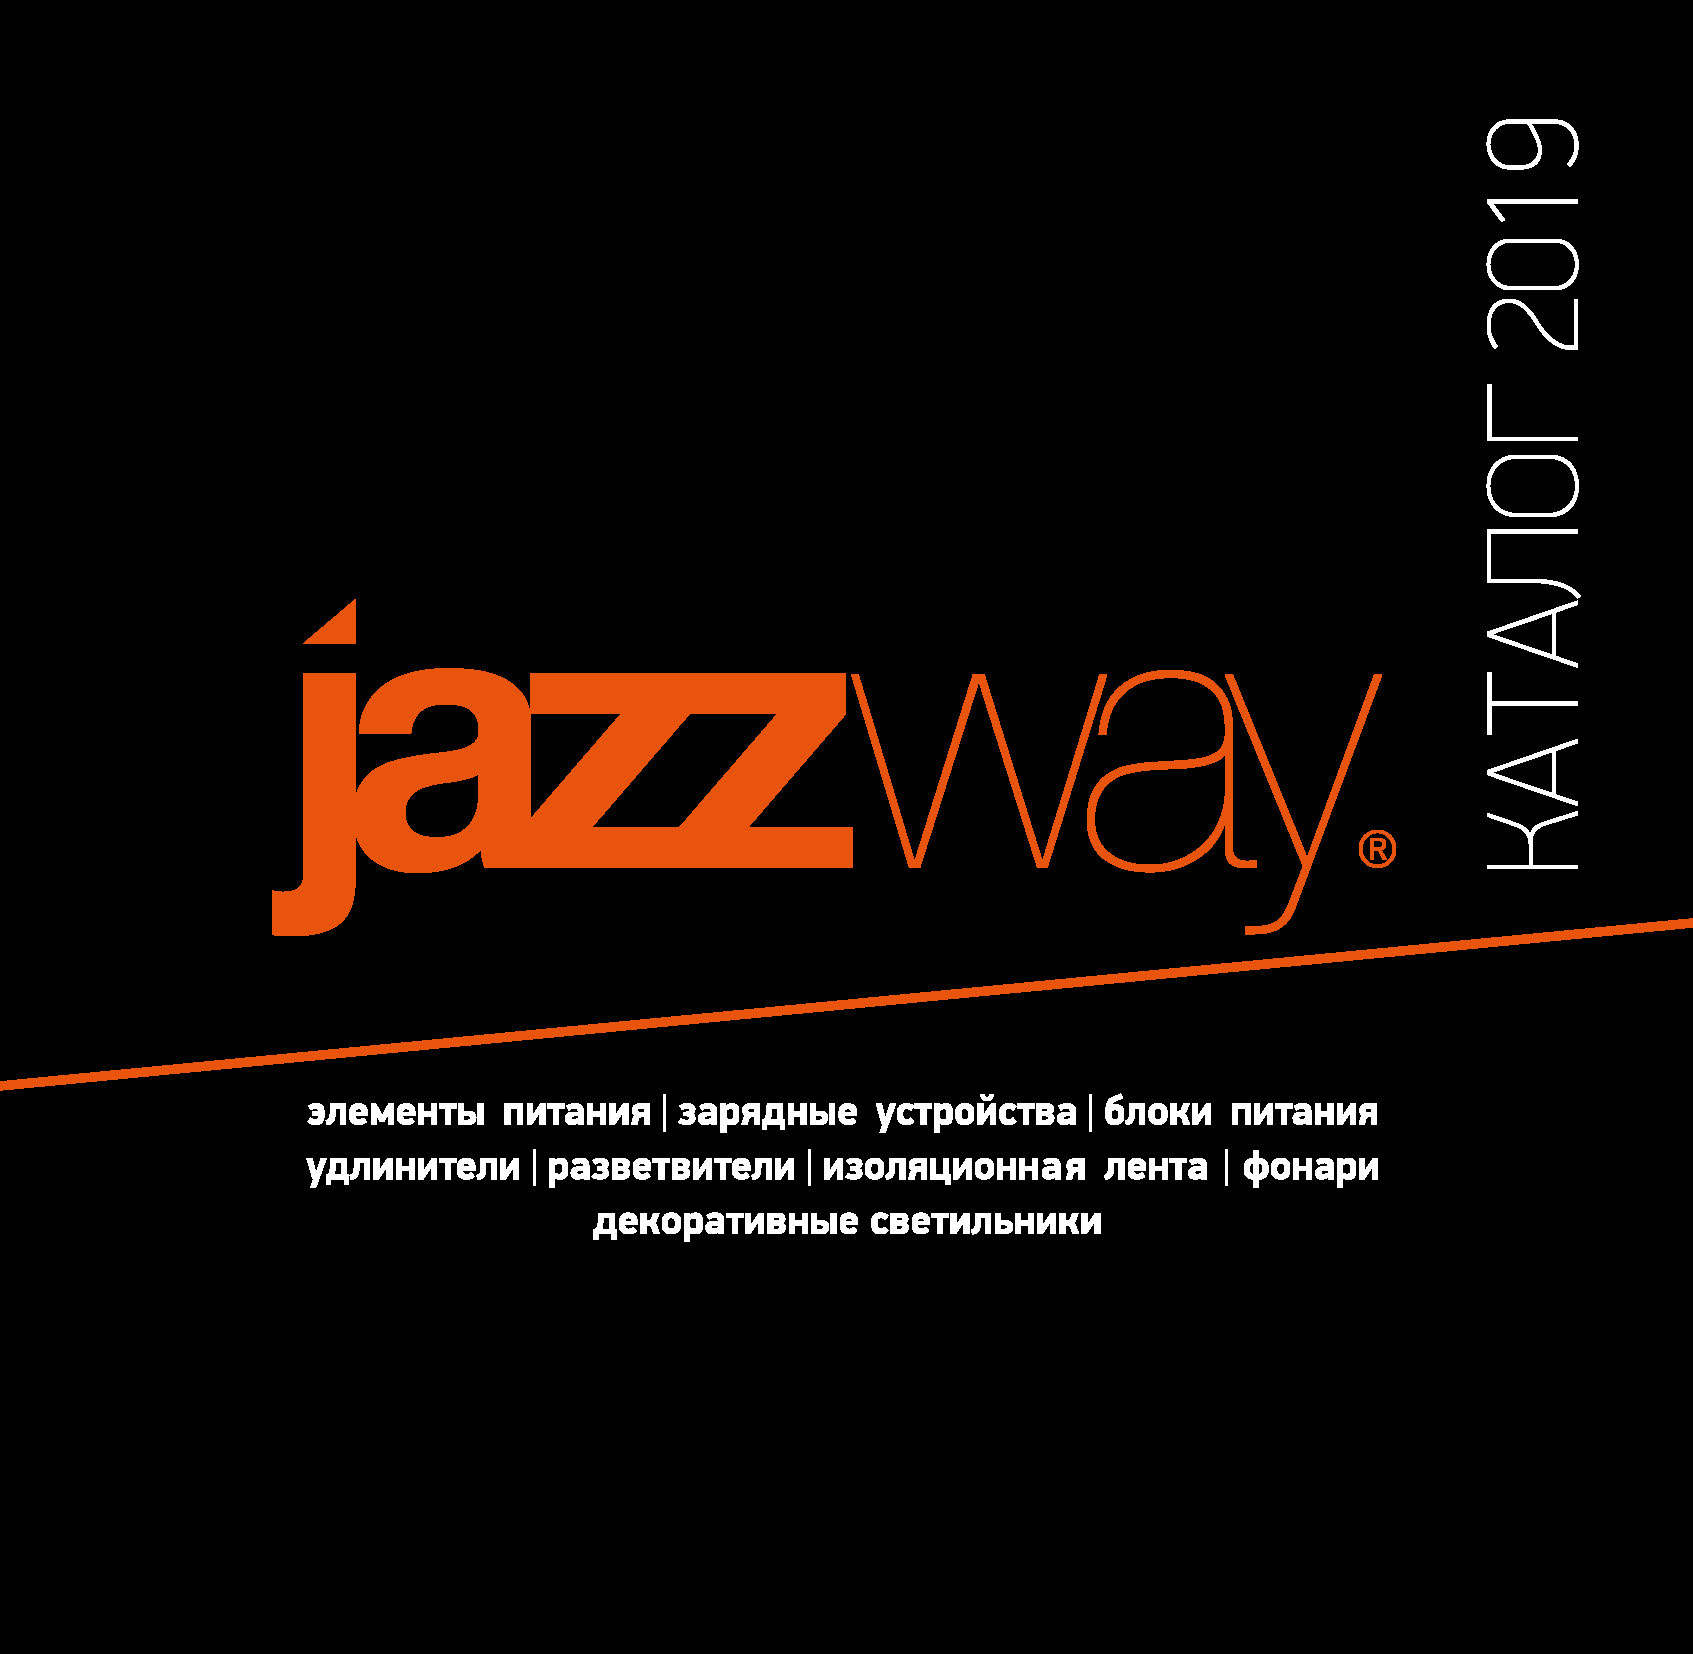 Catalog JazzWay 2019 elements